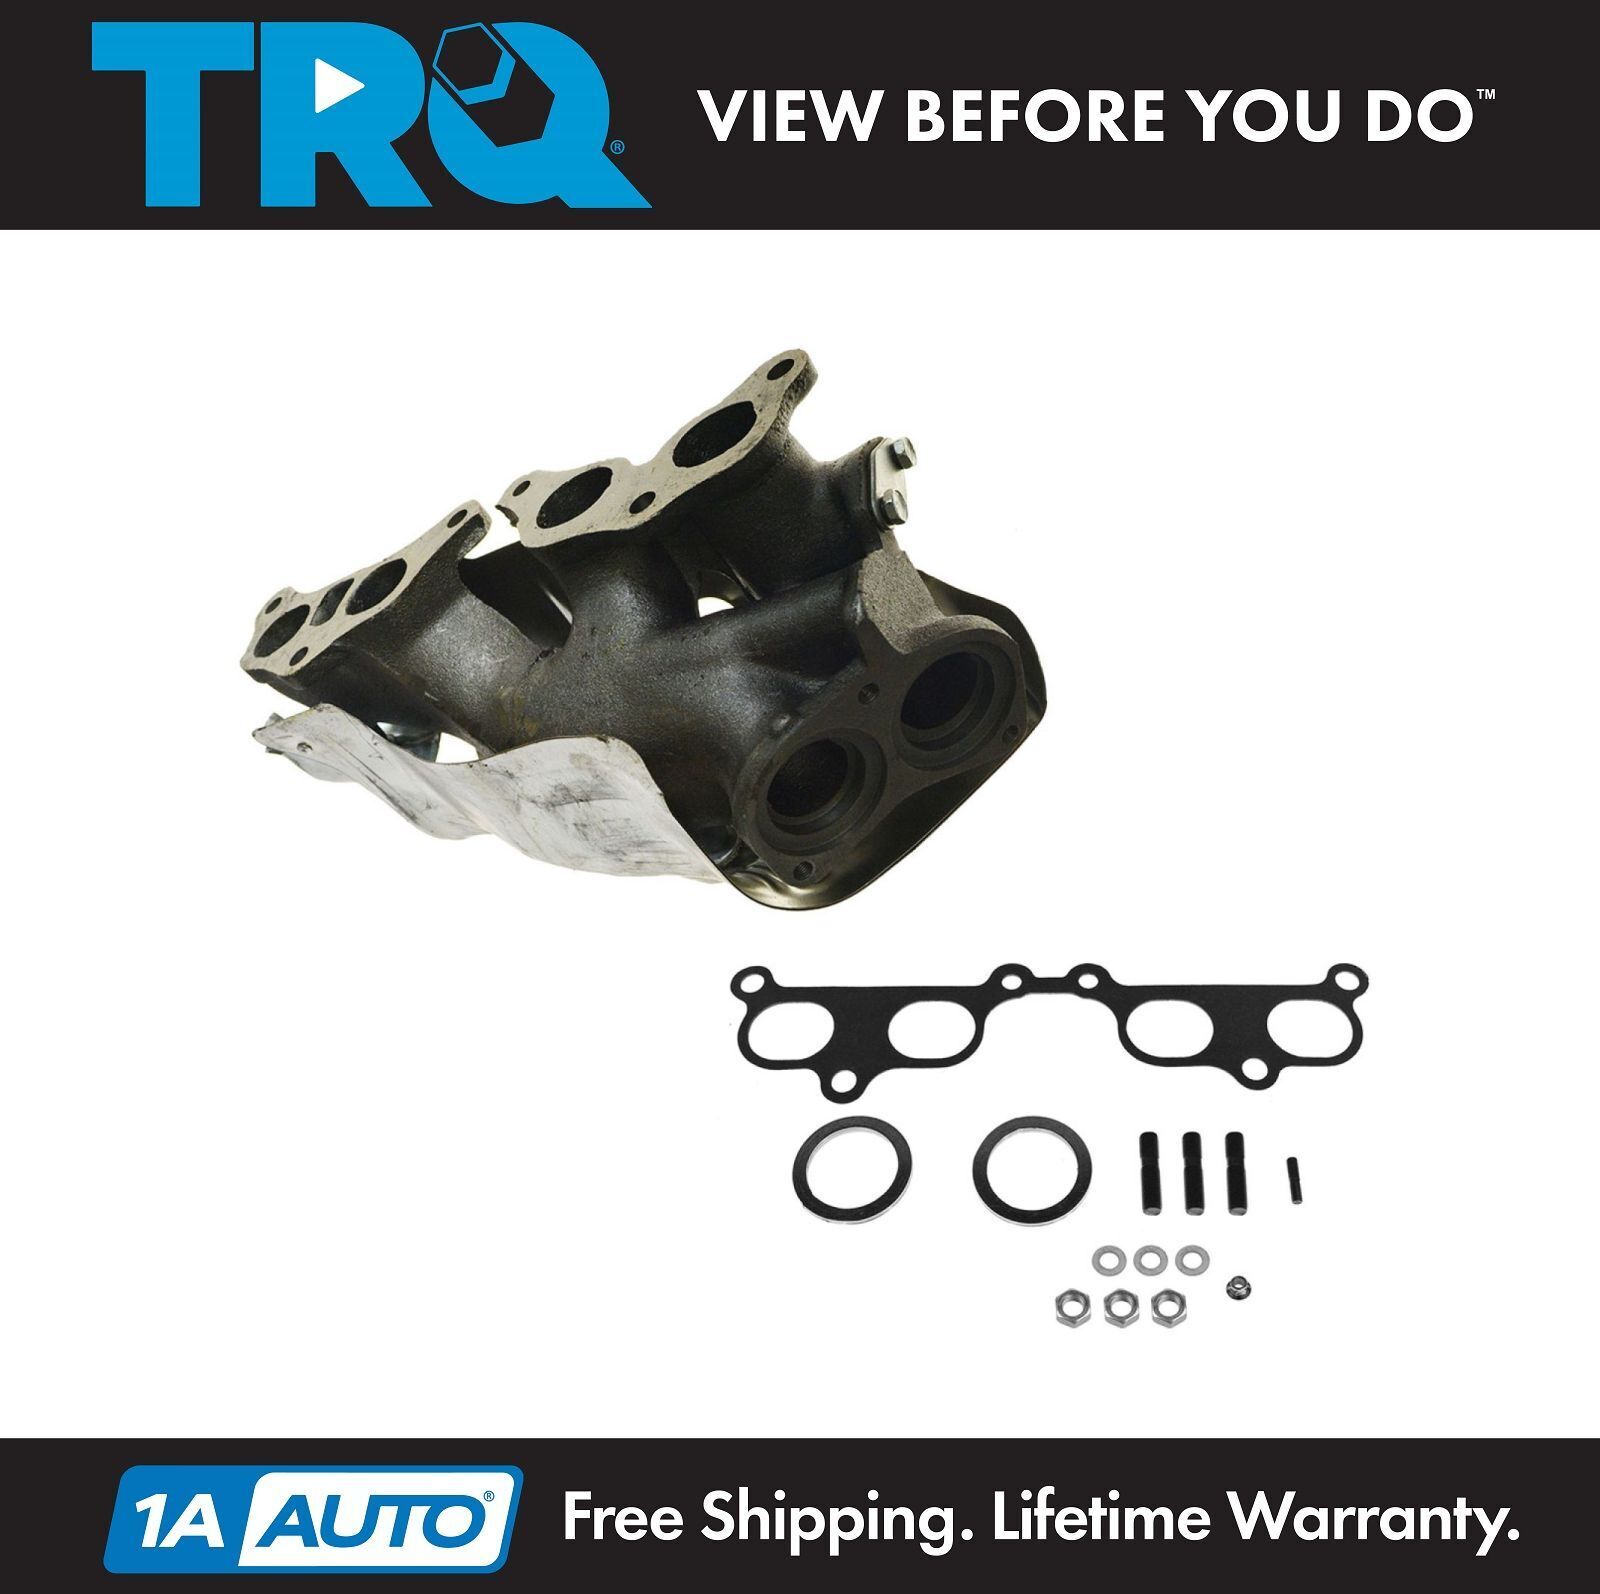 TRQ Exhaust Manifold & Gasket Kit for Toyota 4Runner Tacoma T100 Truck 2.4L 2.7L